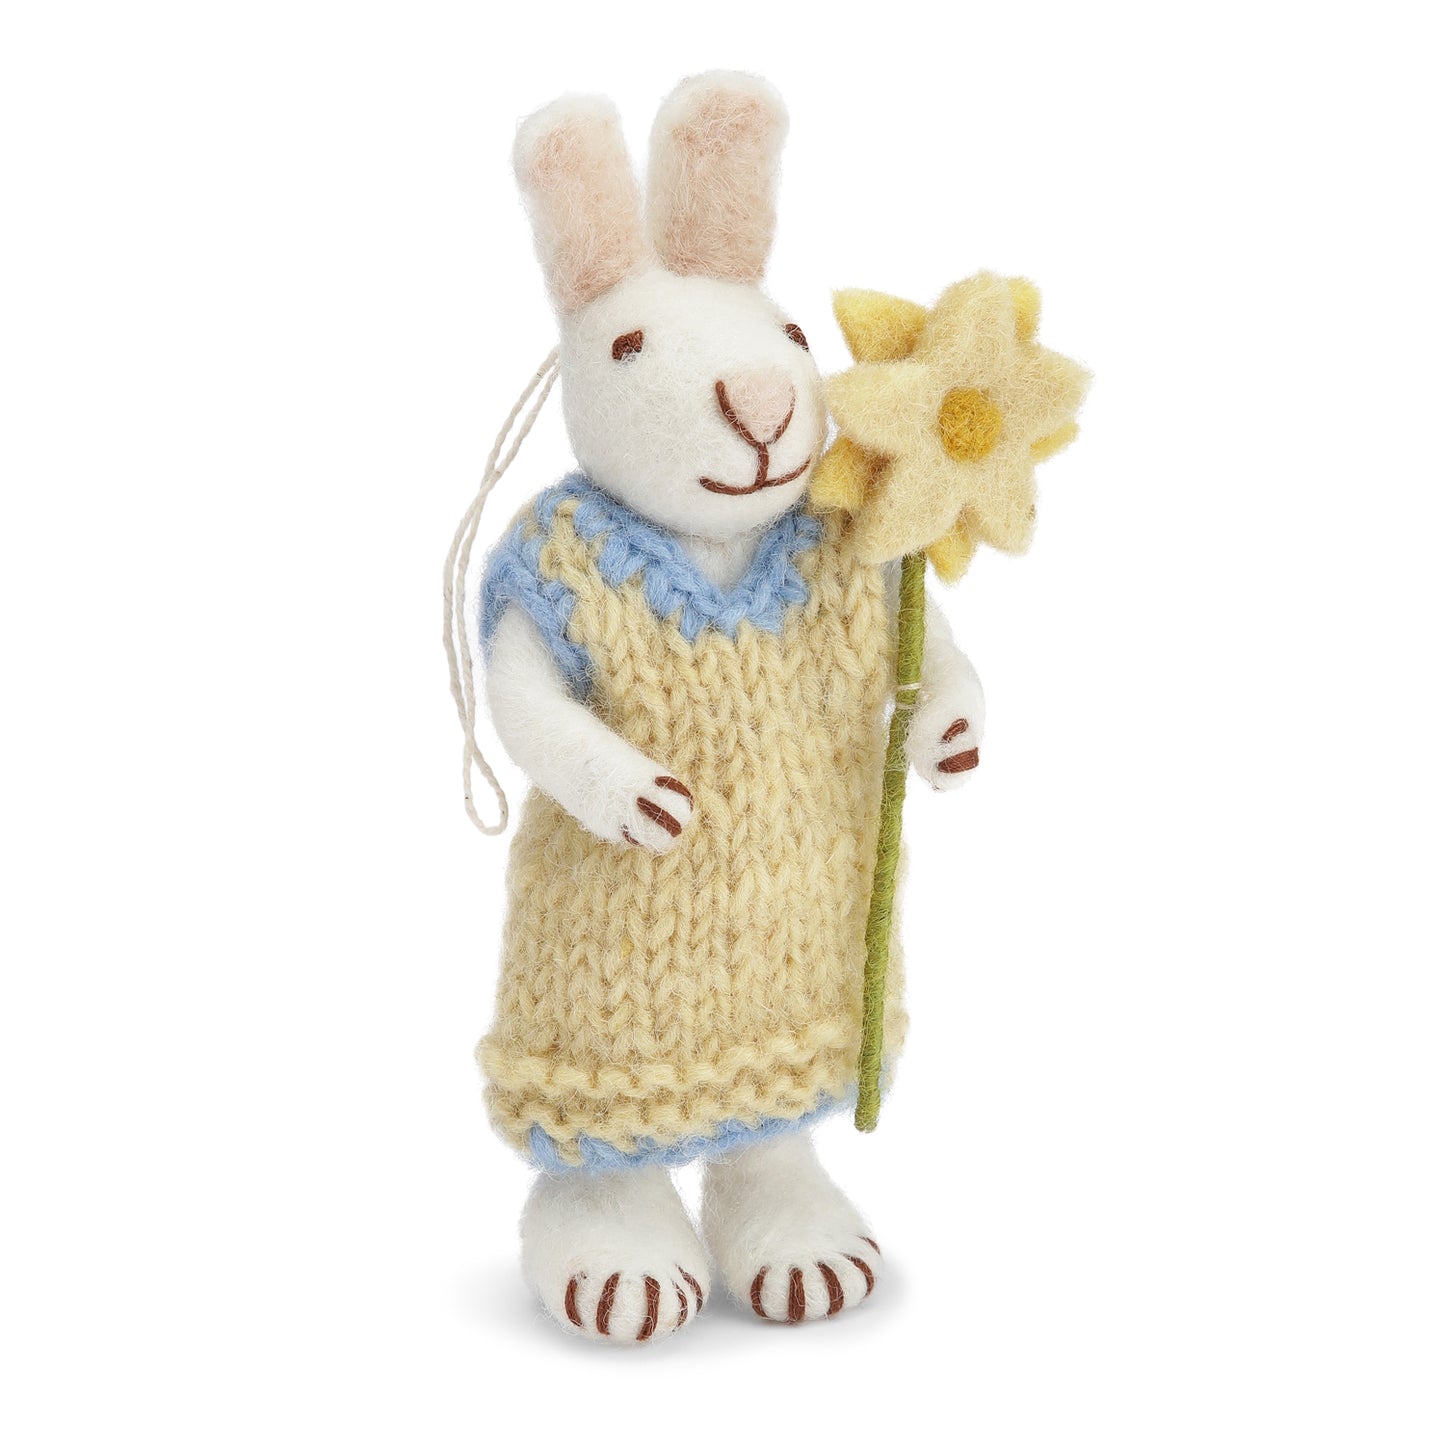 Bunny Small White dress & flower